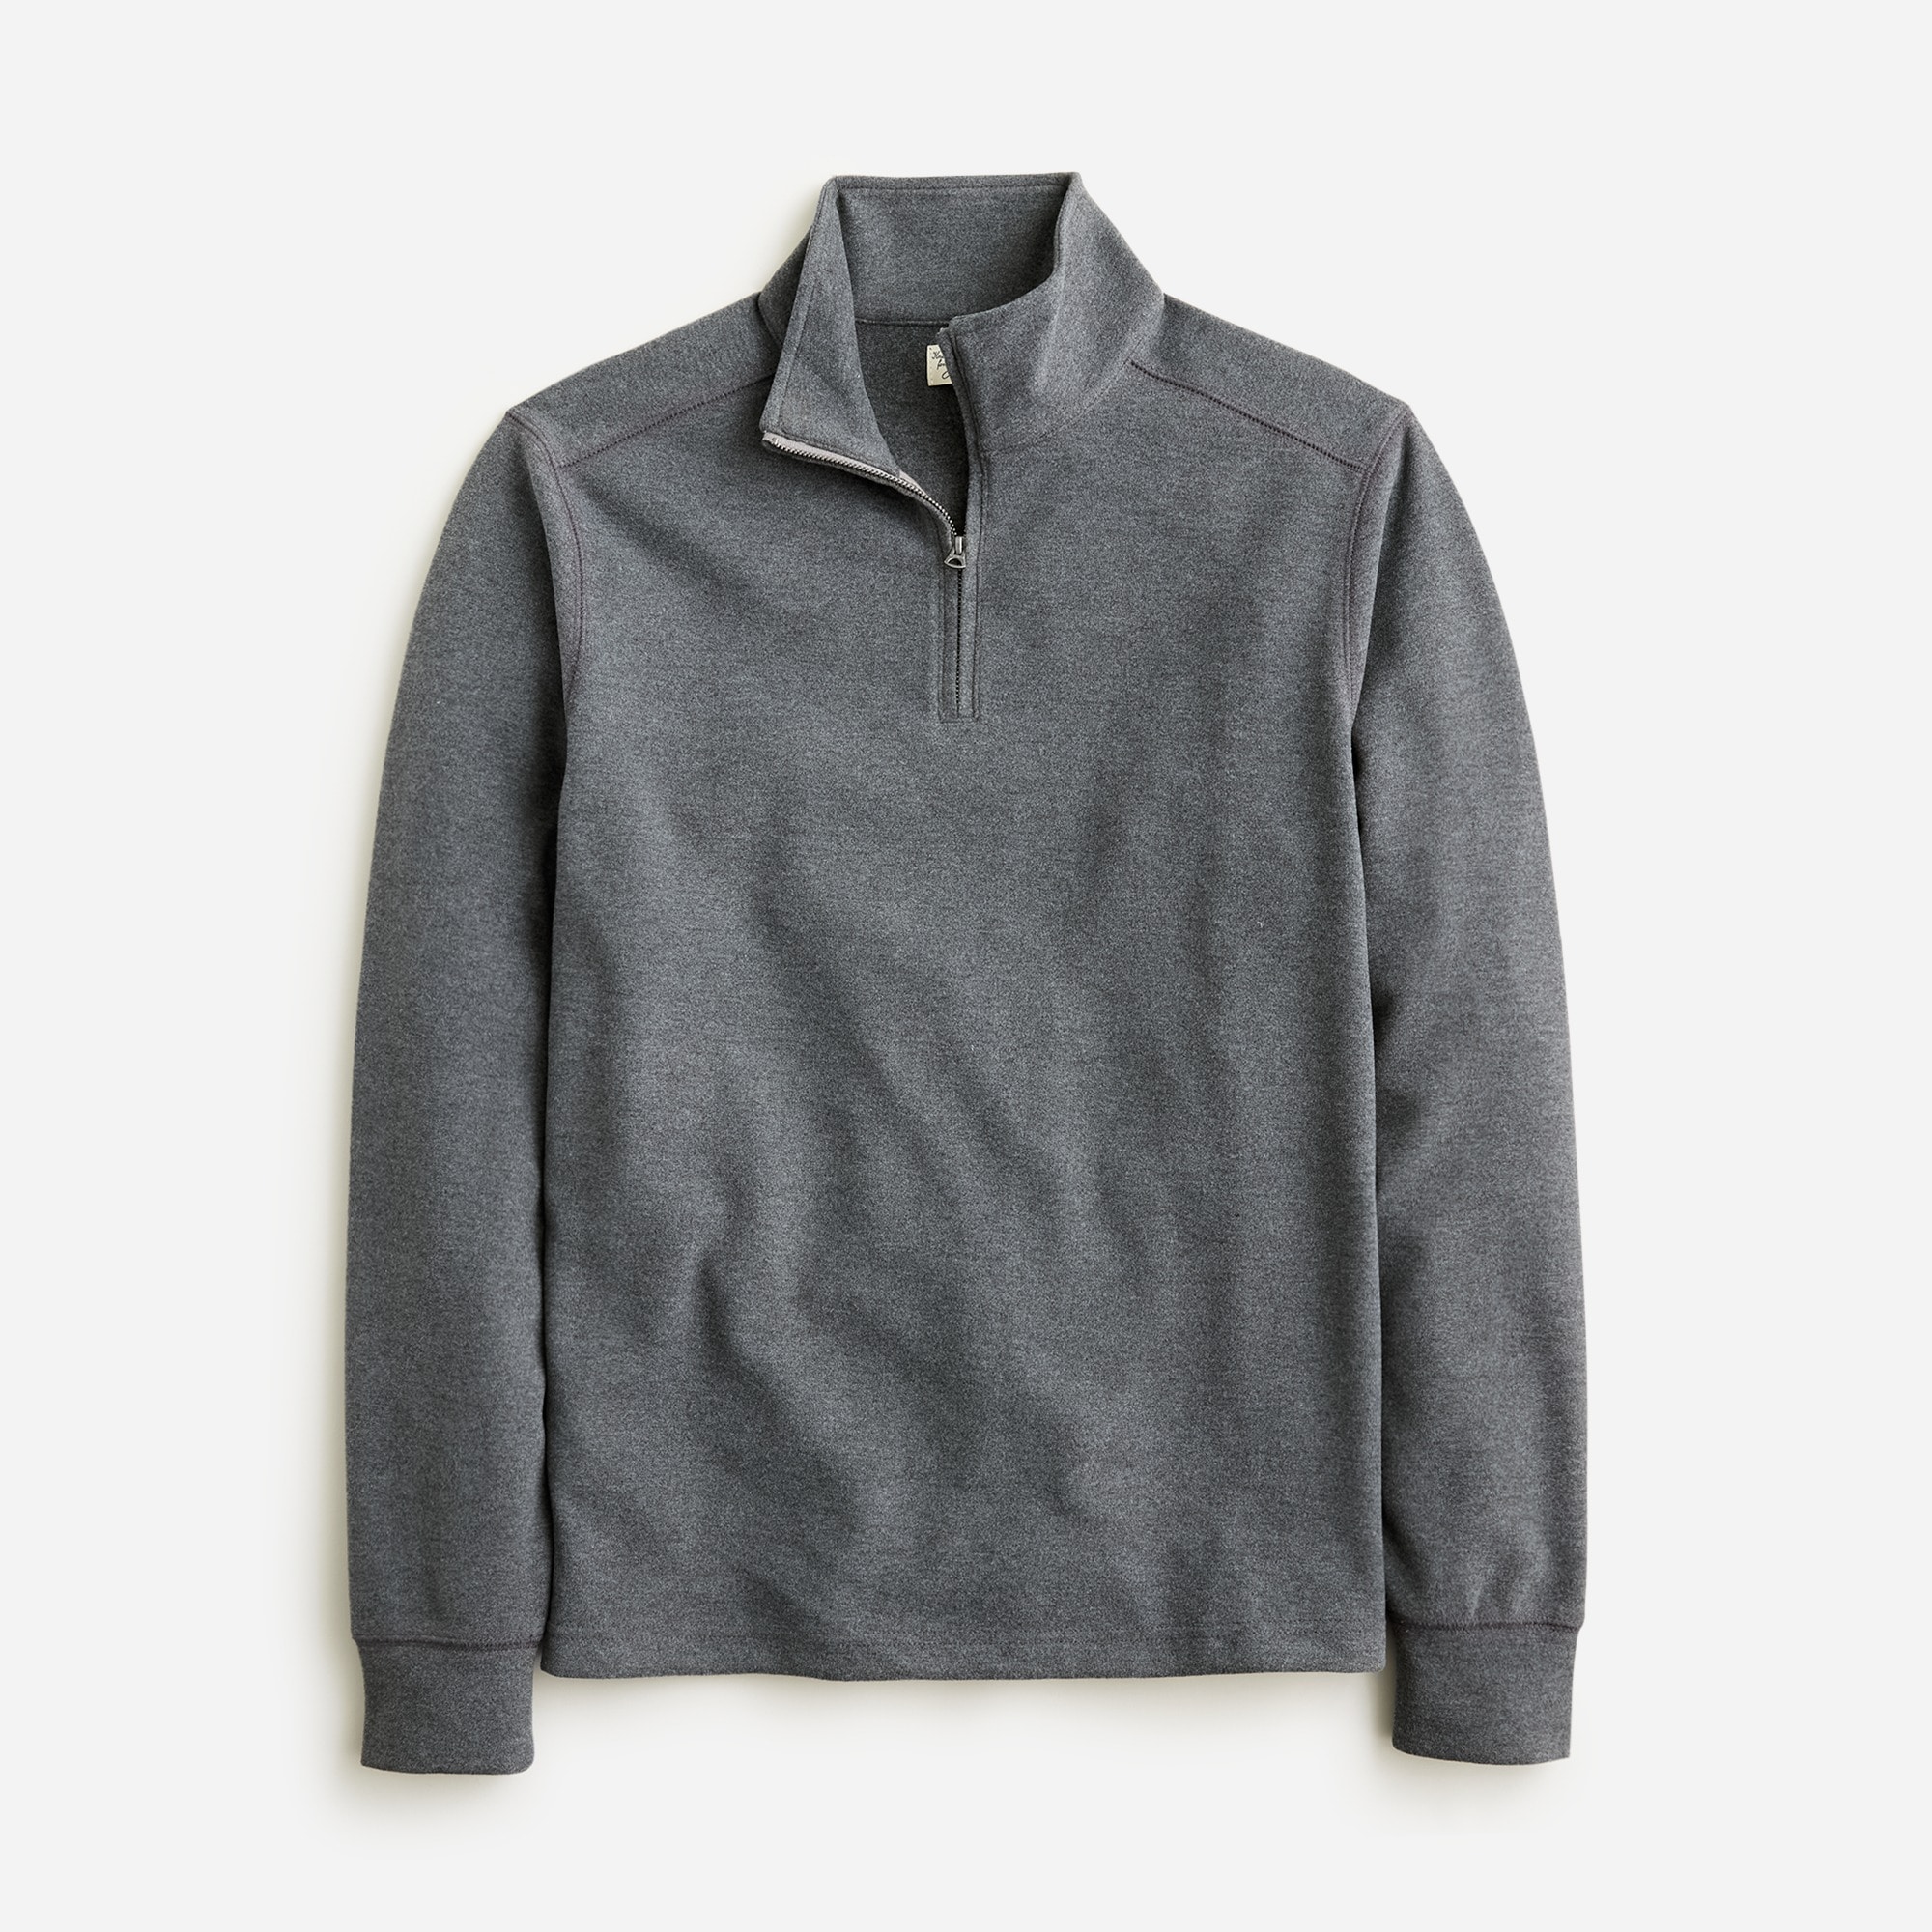  Seaboard soft-knit half-zip pullover